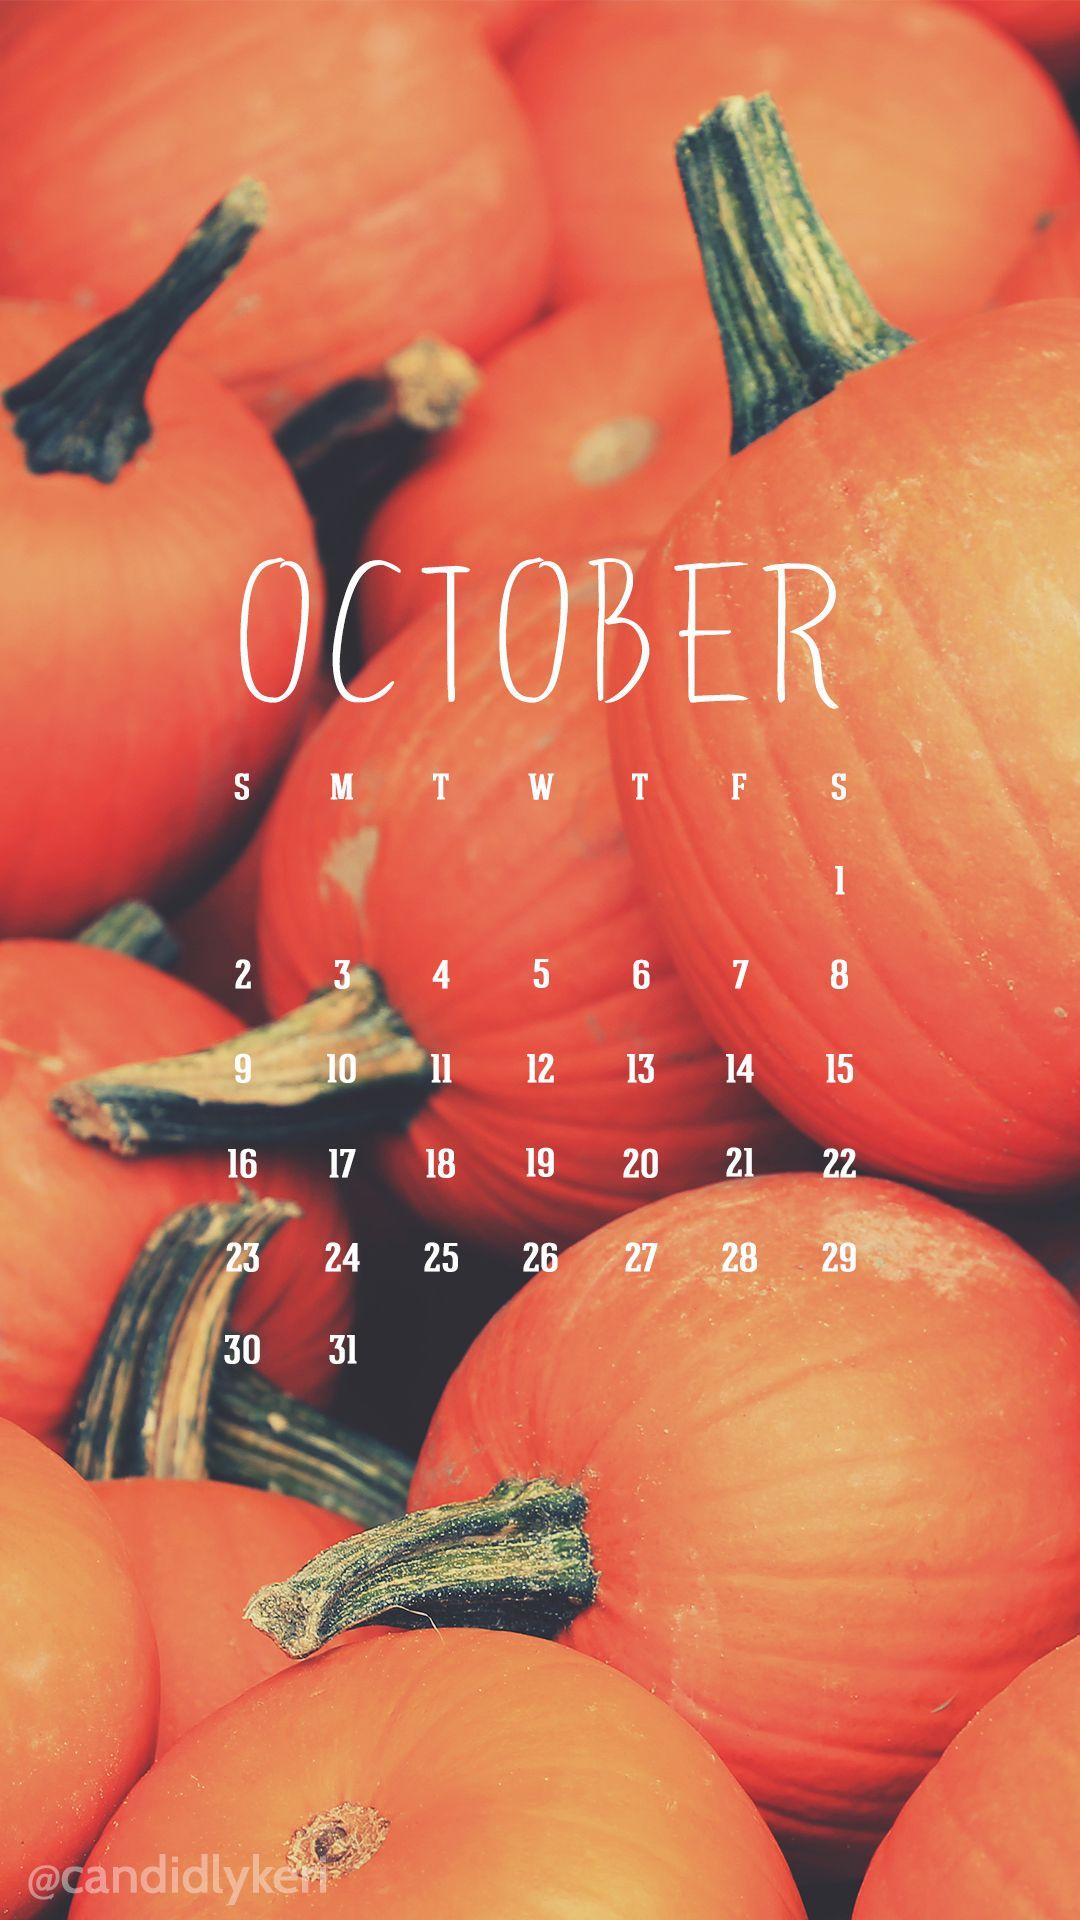 Cute pumpkin patch image October calendar 2016 wallpaper you can